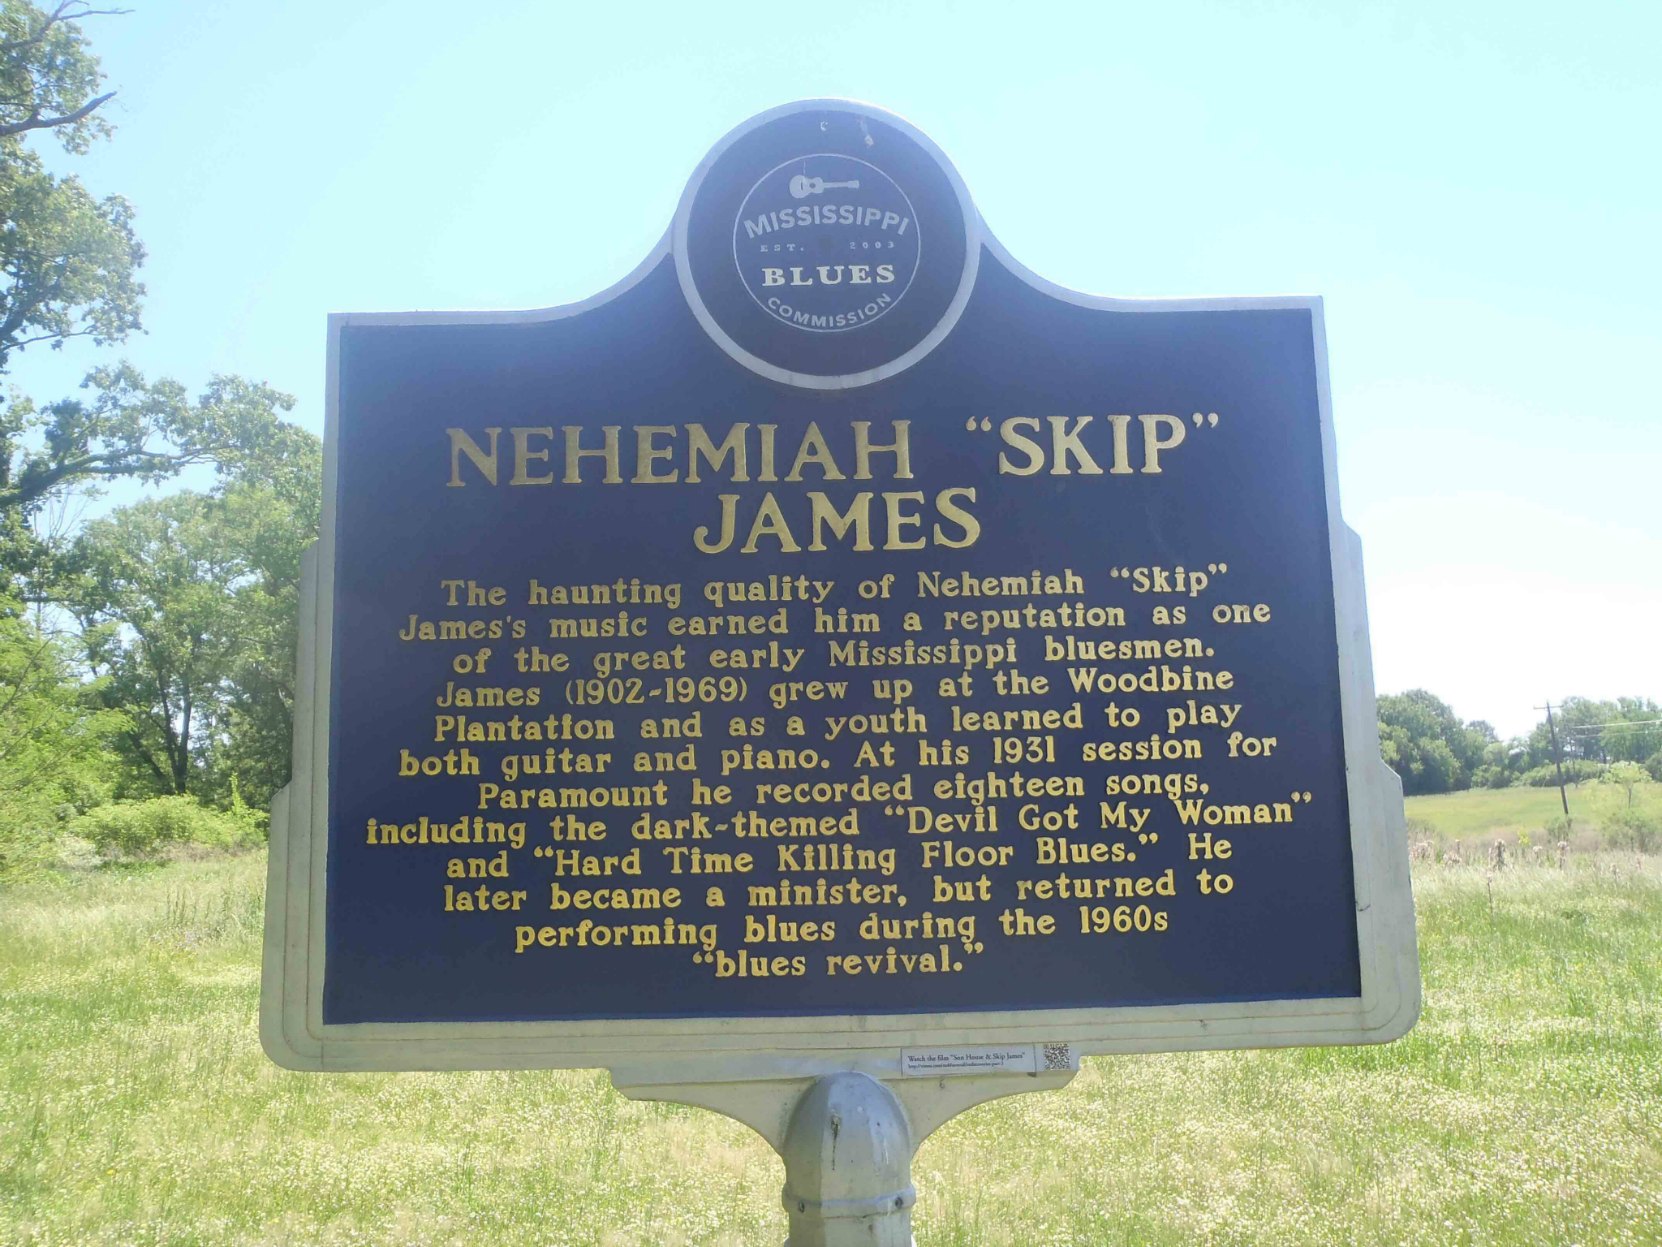 Mississippi Blues Trail marker for Nehemiah "Skip" James, Bentonia, Yazoo County, Mississippi